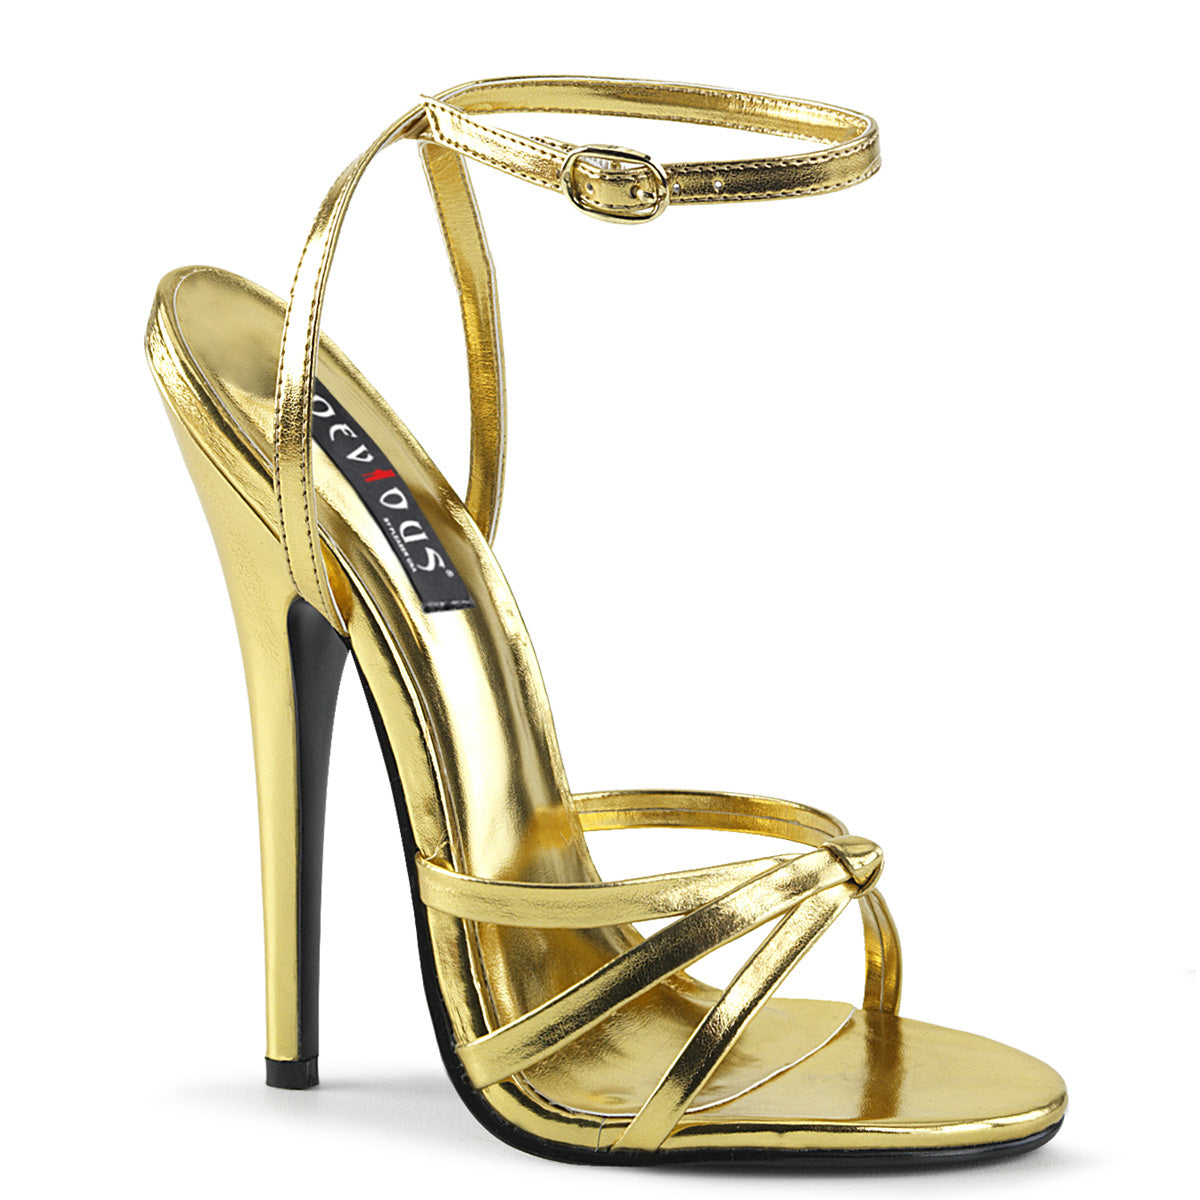 Domina-108 Effen Fetish Shoes 6 "Heel Gold Metallic Shoes